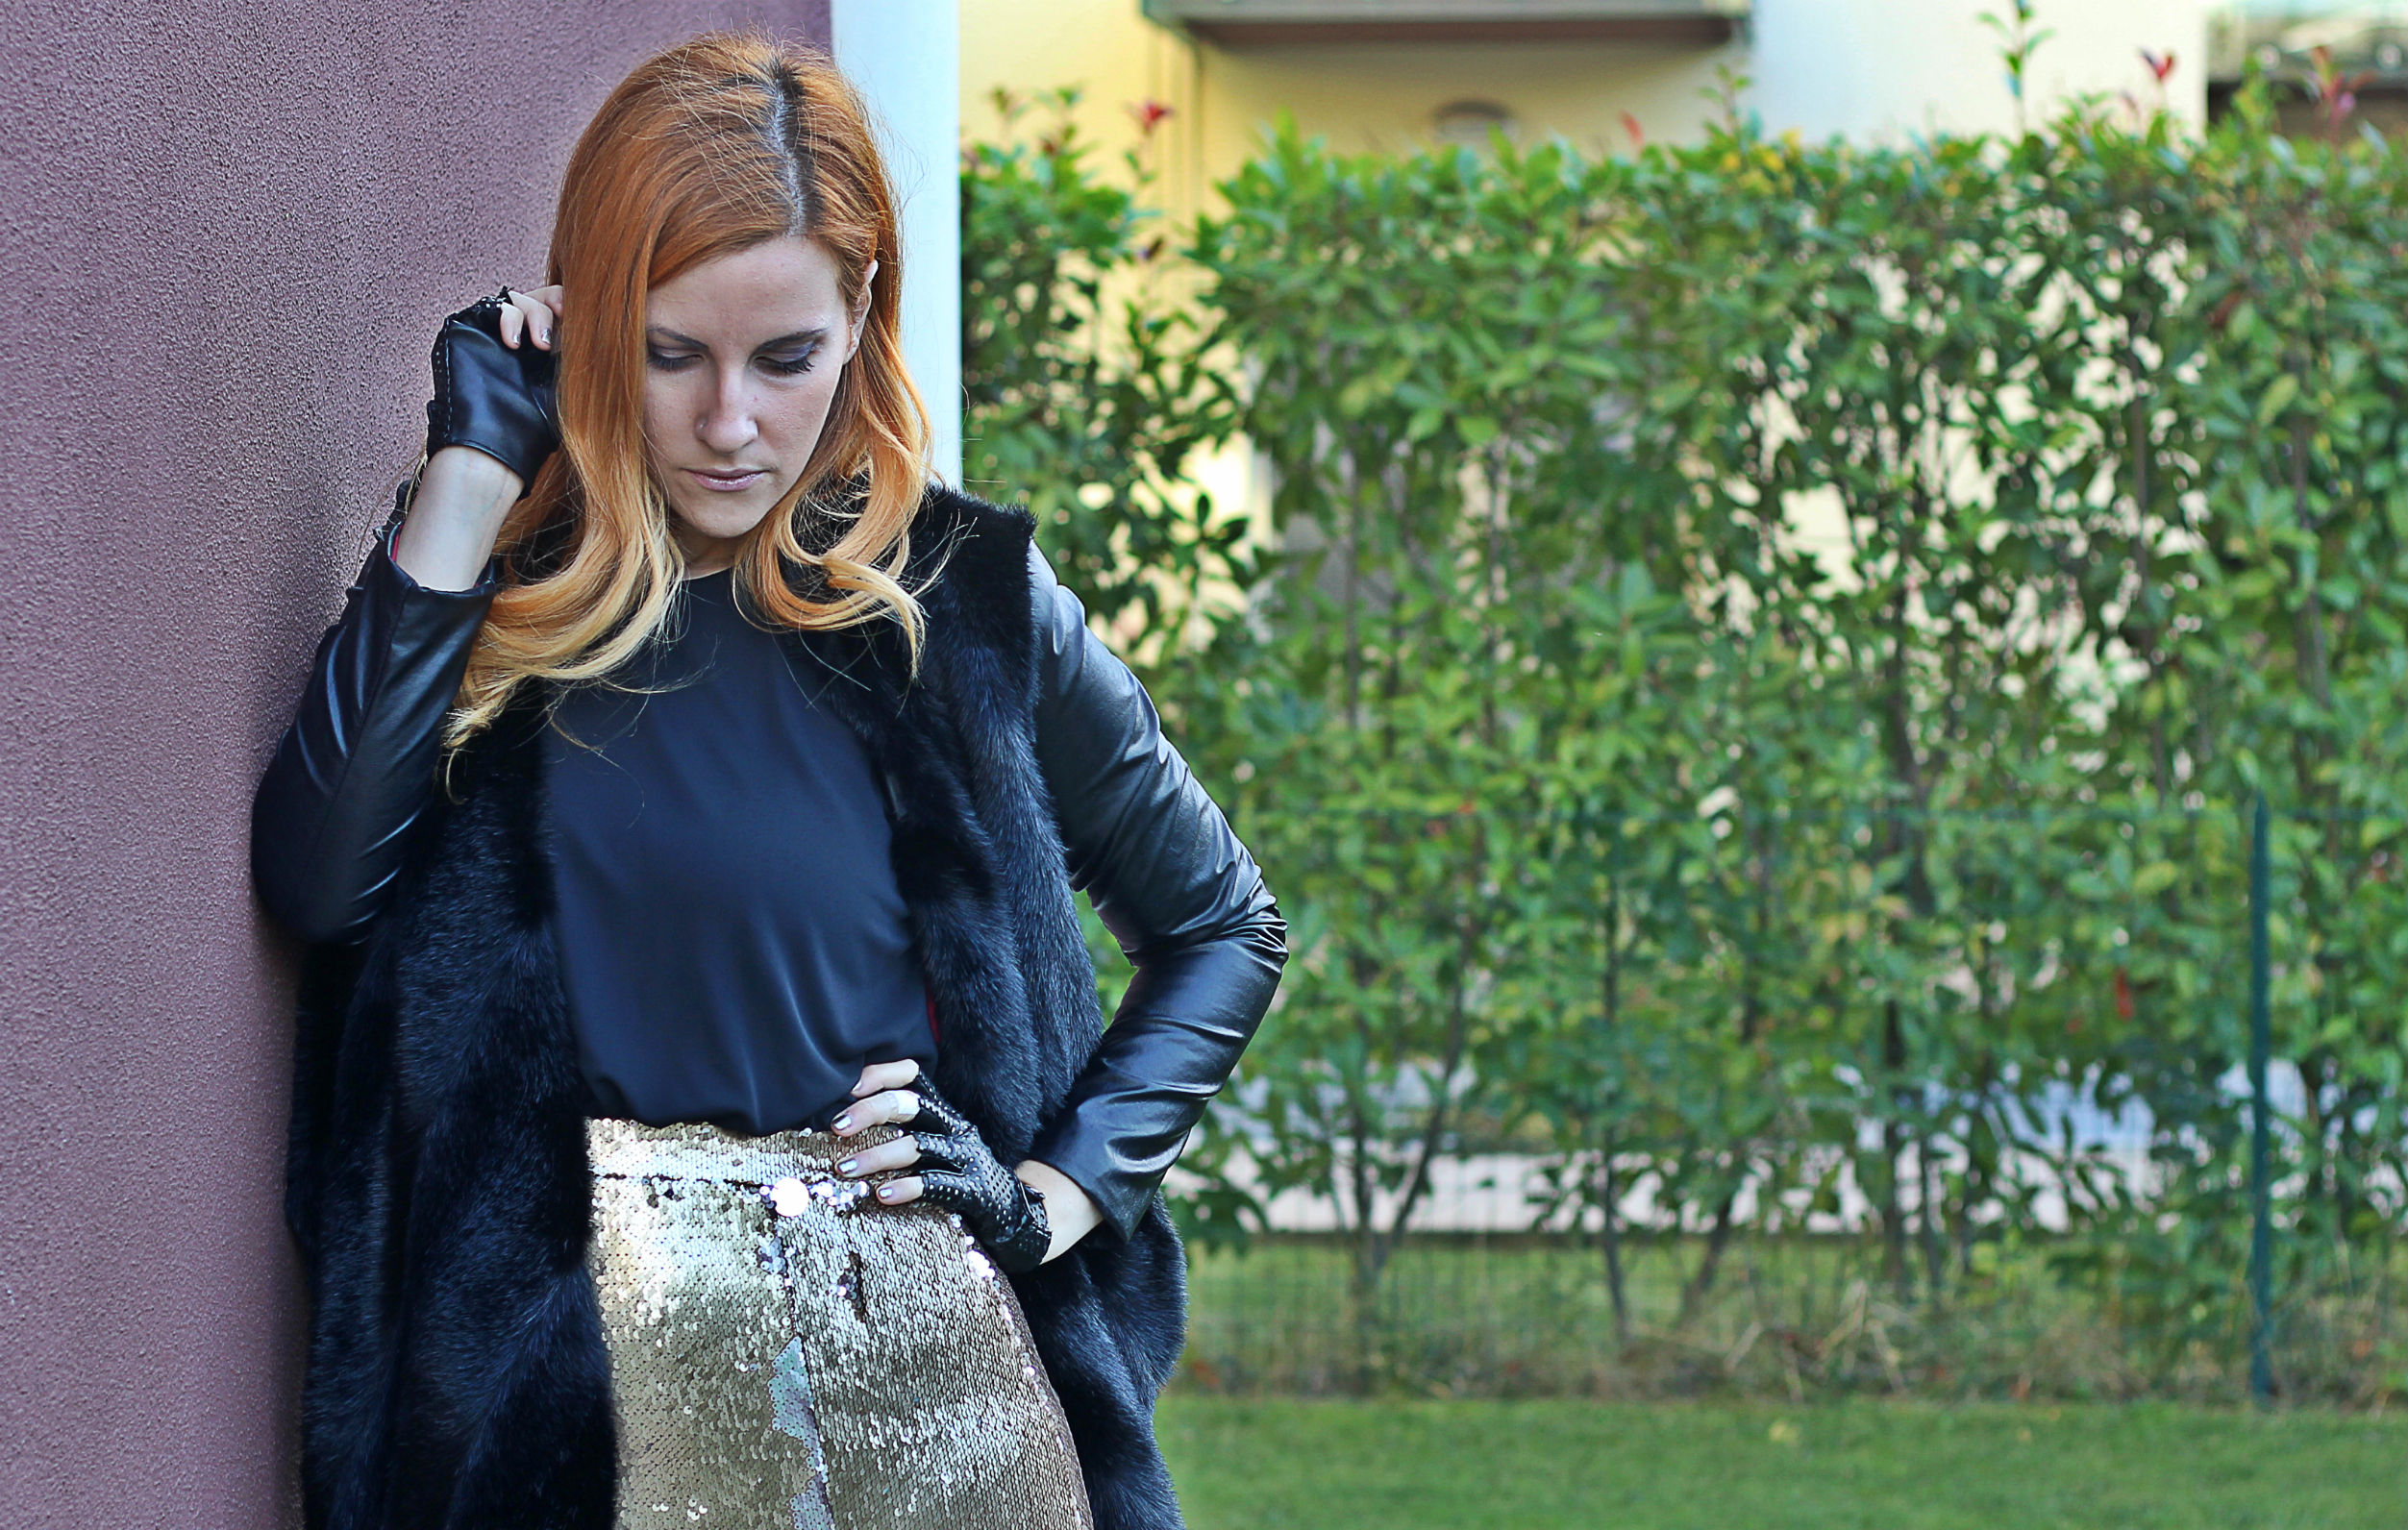 elisabetta bertolini total look tuwe - fashion blogger italia - top fashion blogger evento Dior